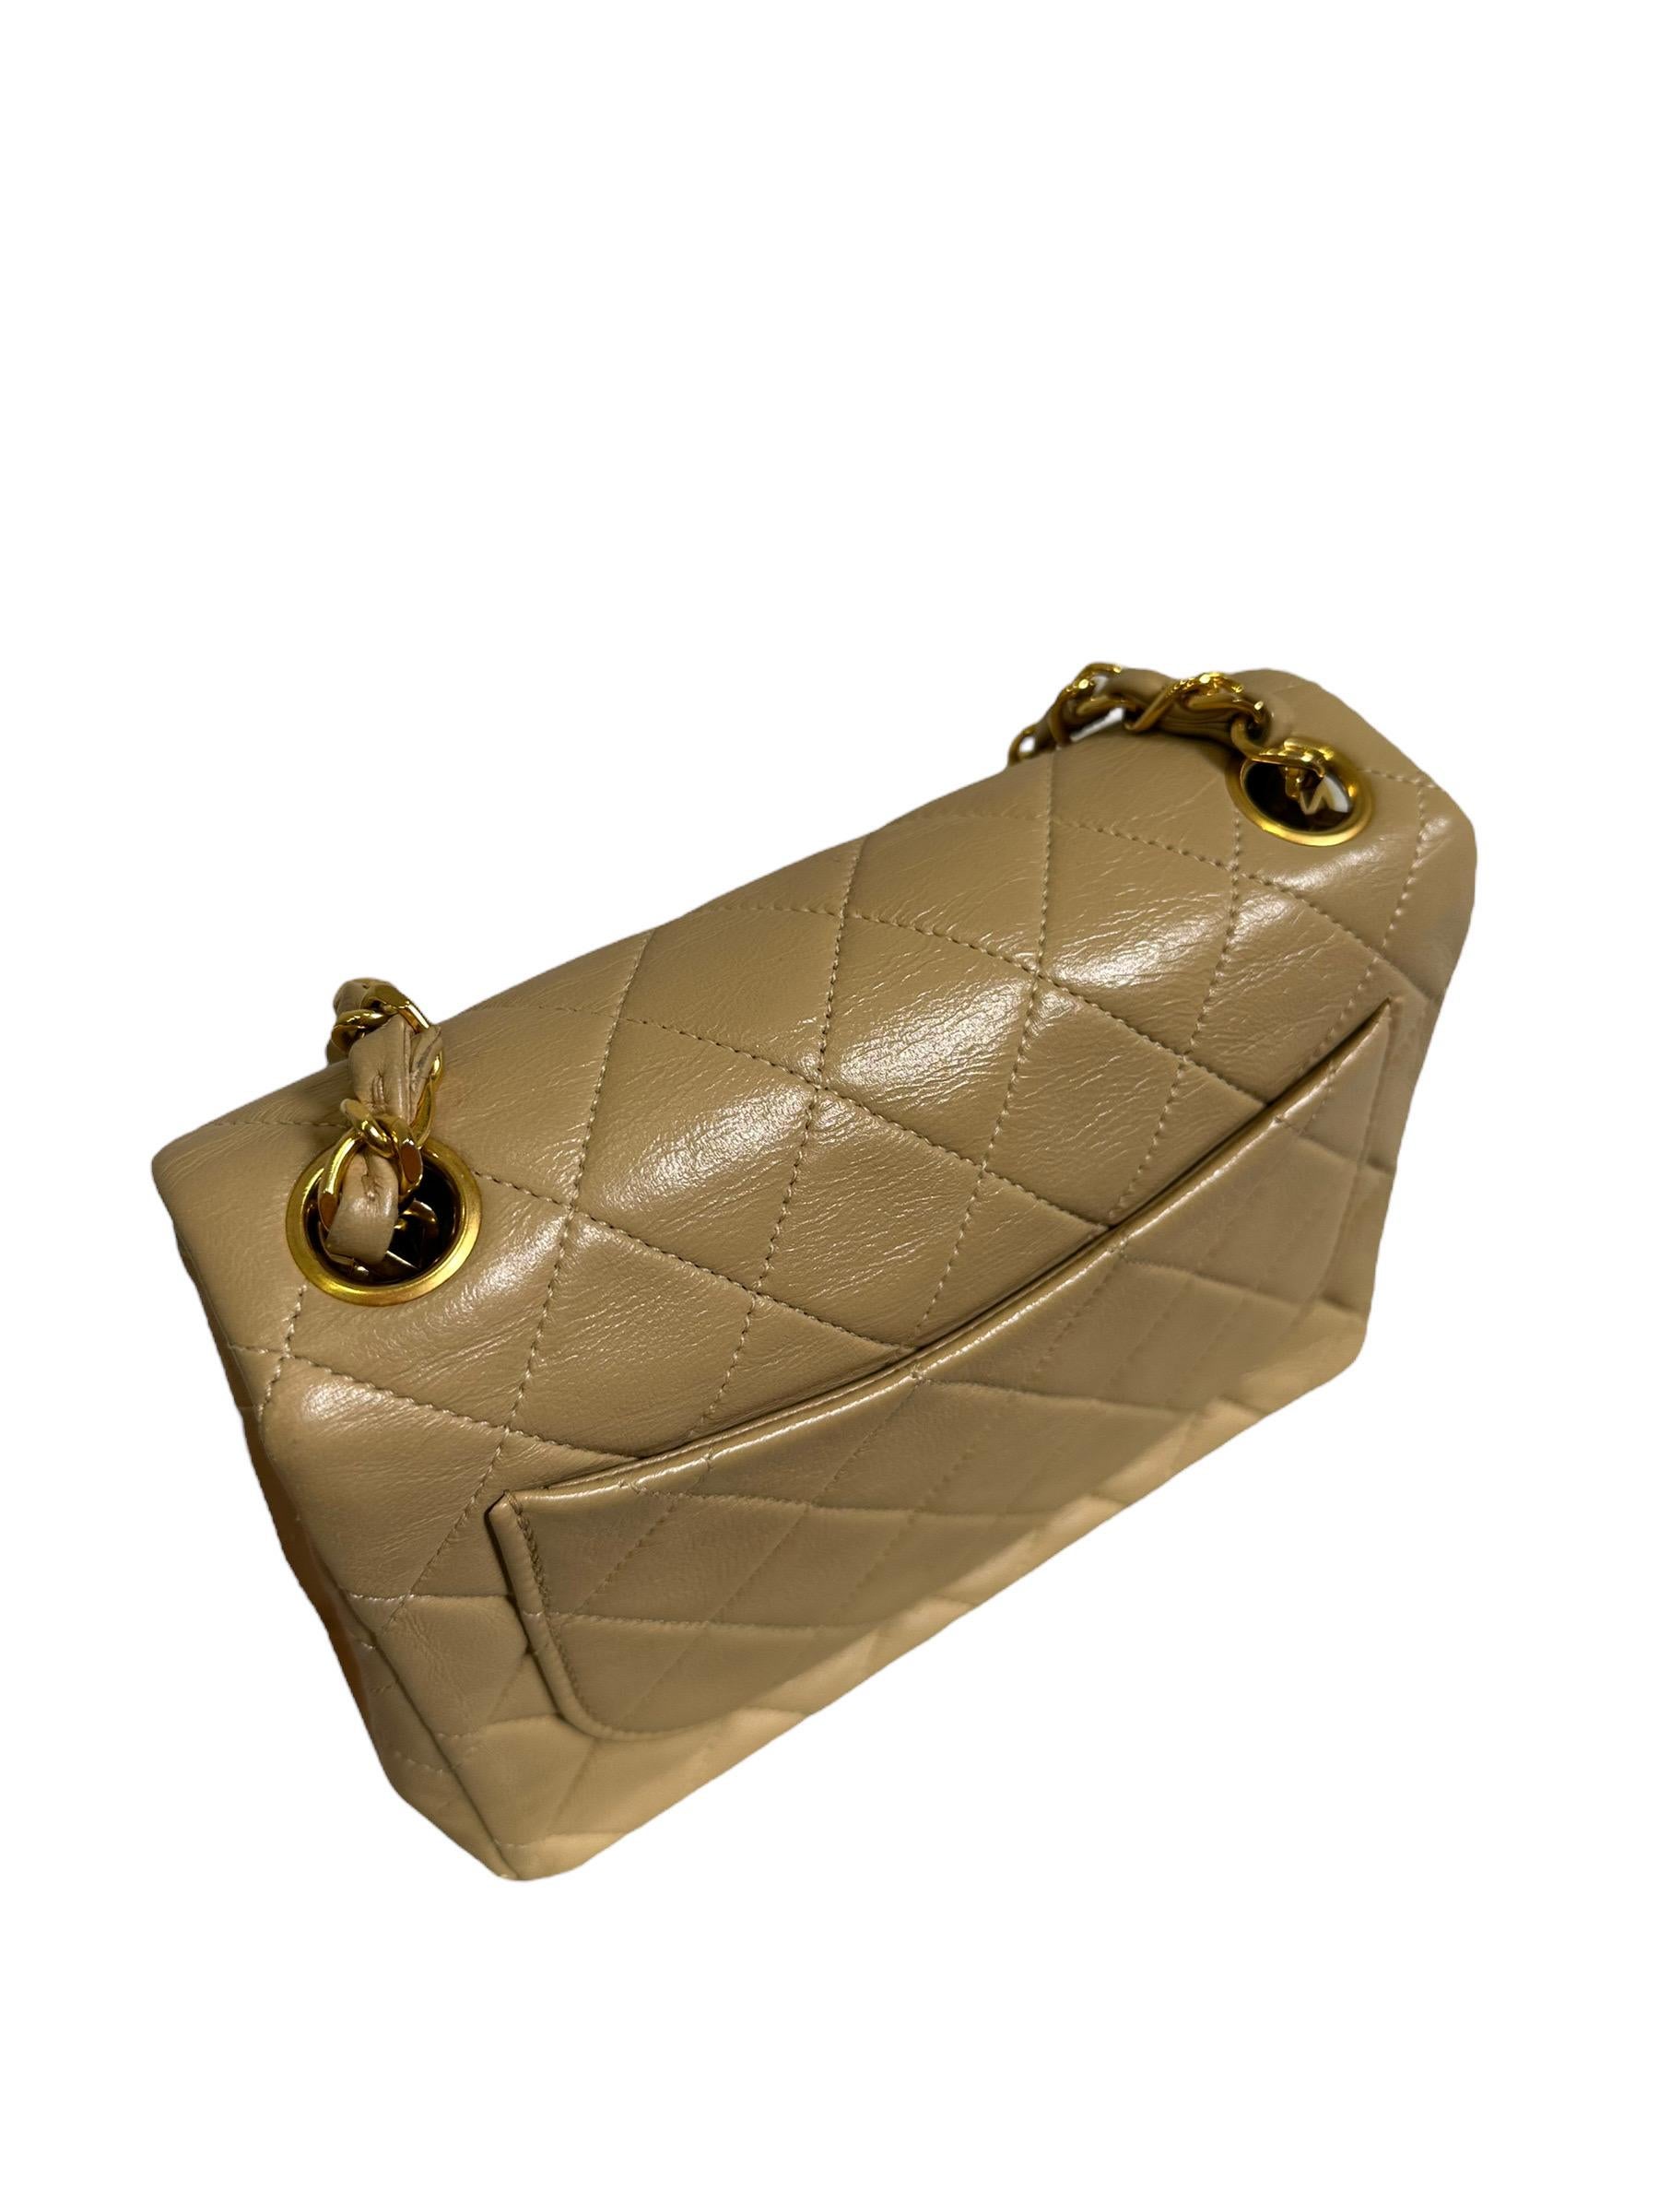 1990s Chanel Mini Flap Beige Leather Shoulder Bag For Sale 3